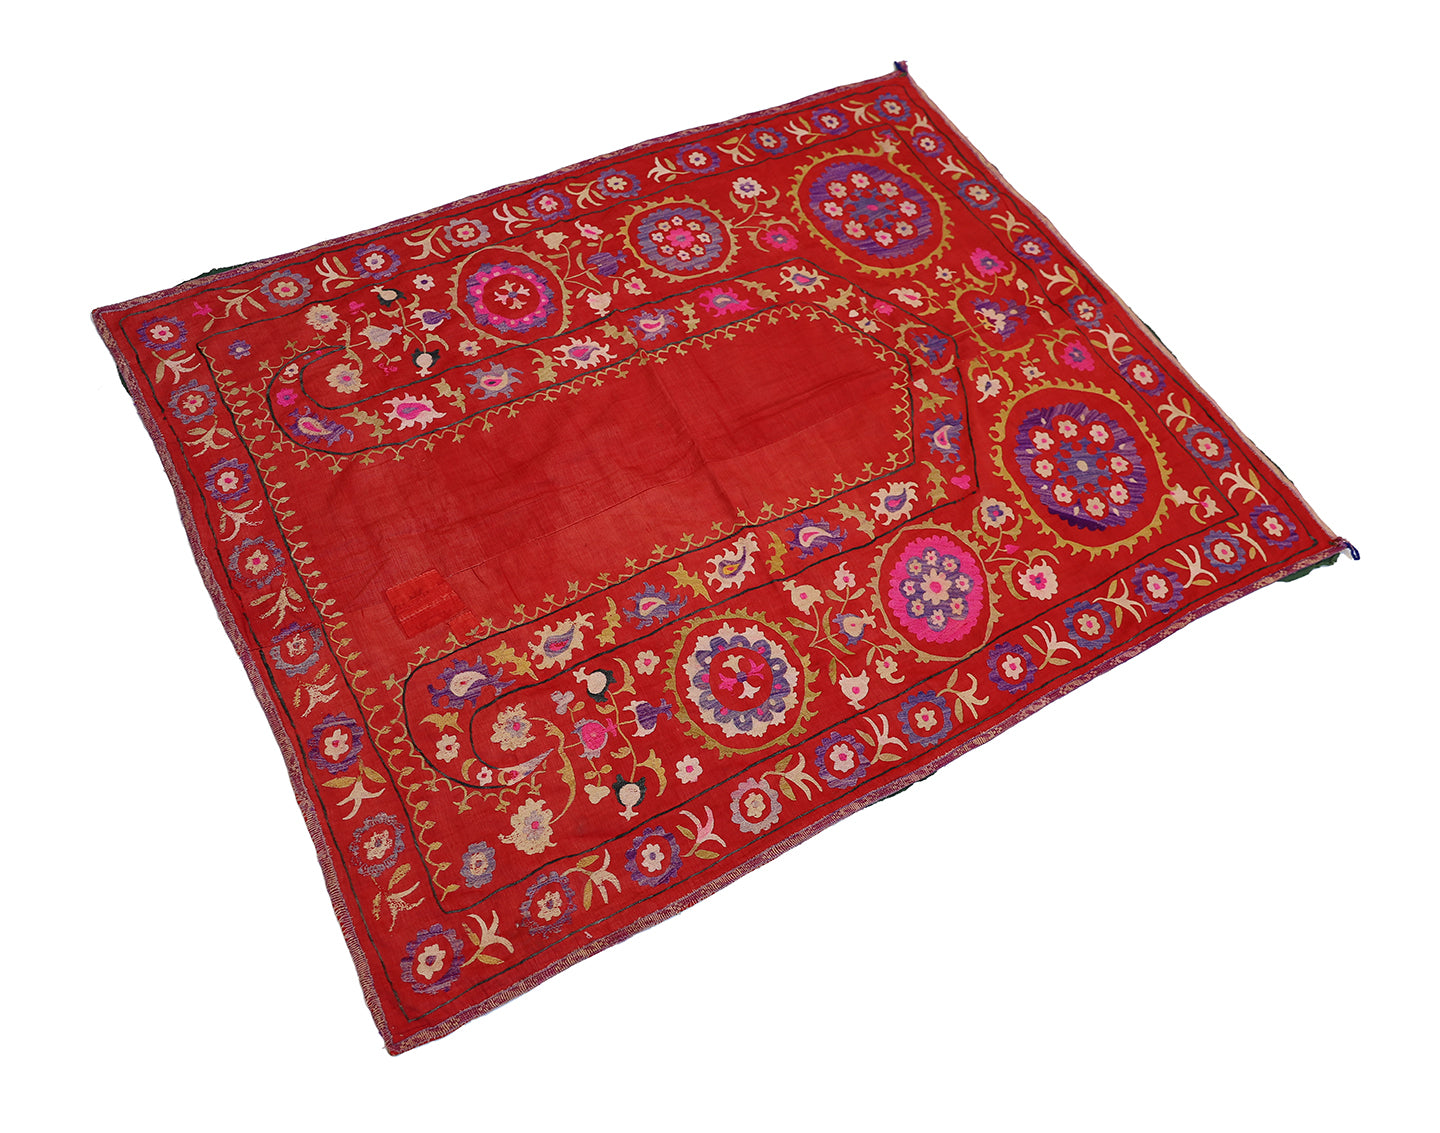 3'x5' Uzbek Suzani Prayer Textile